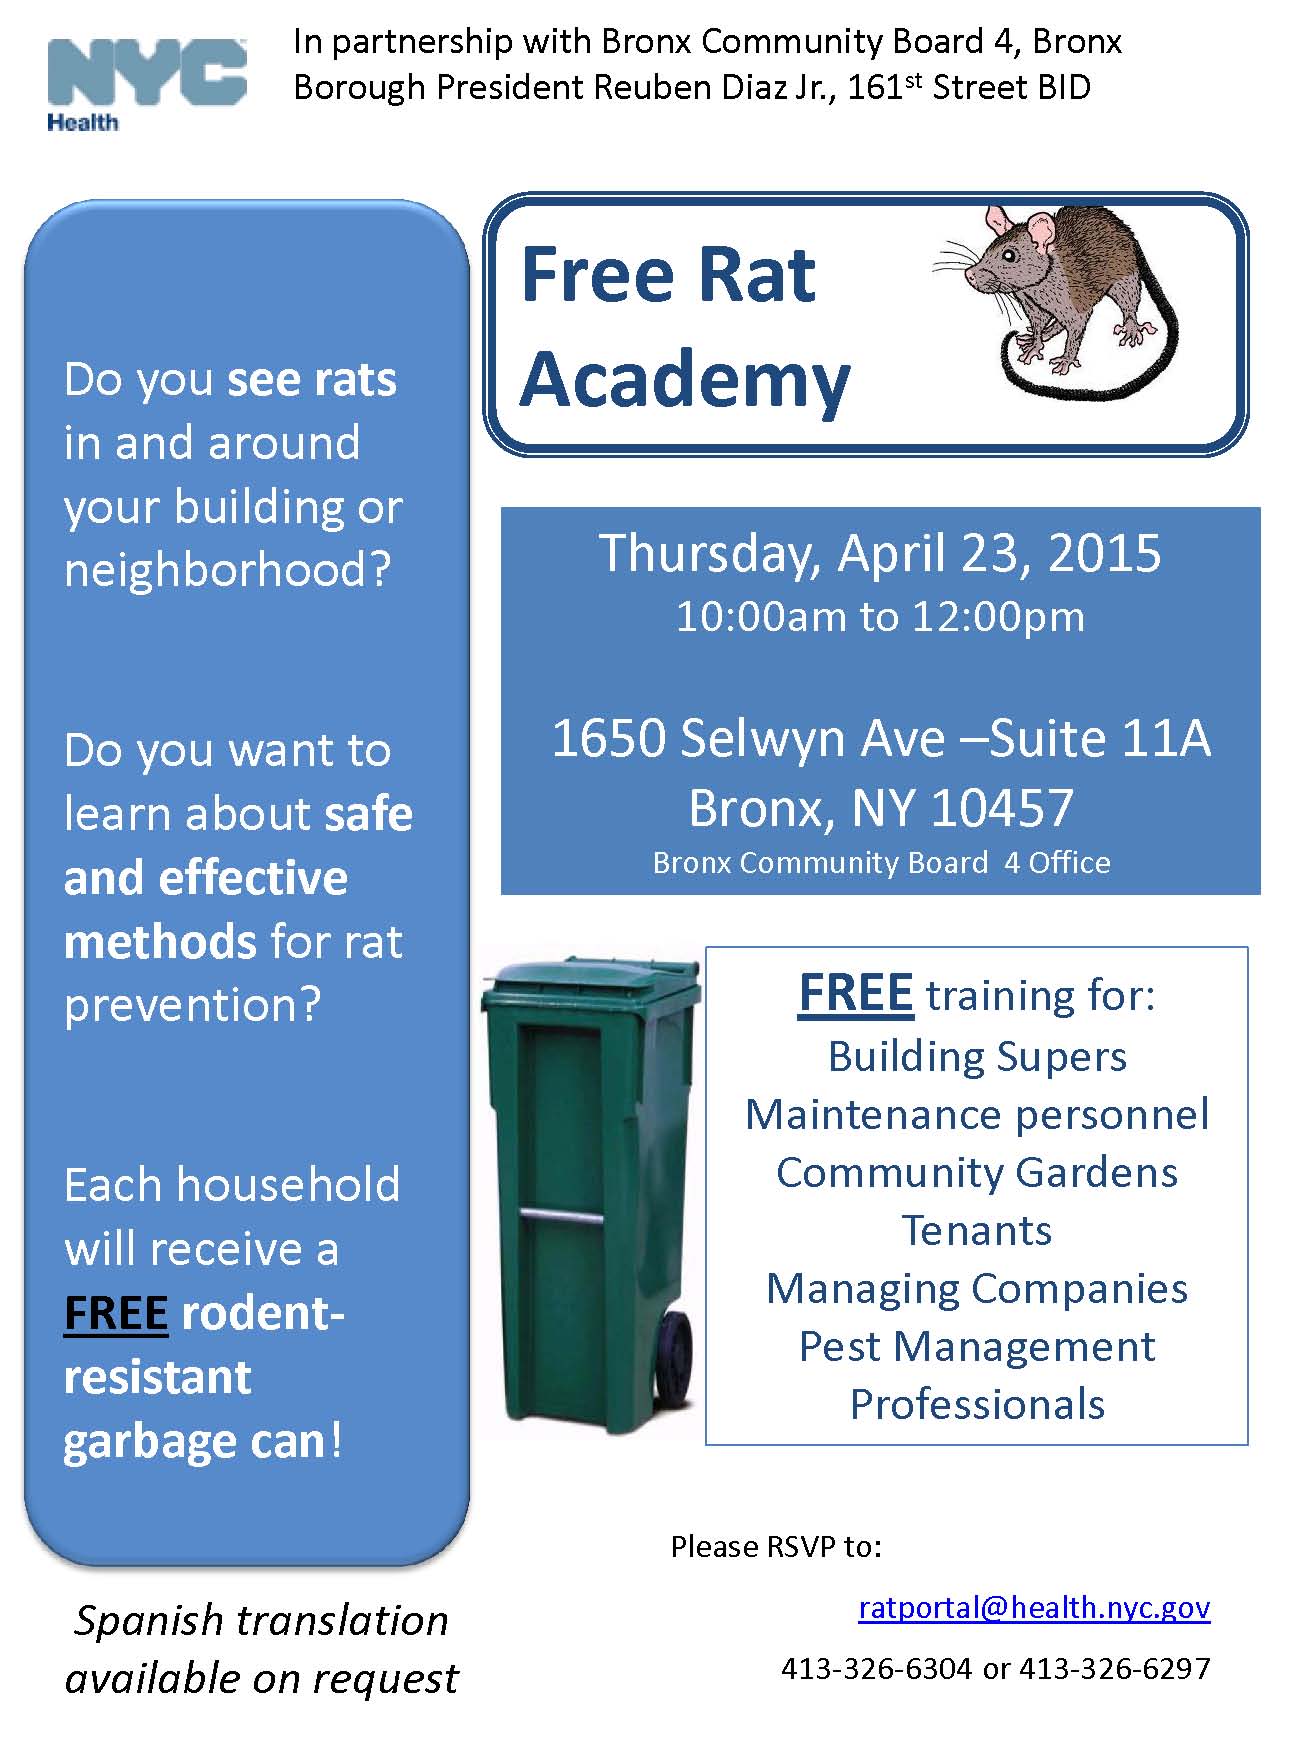 2015_Bronx Rat Academy